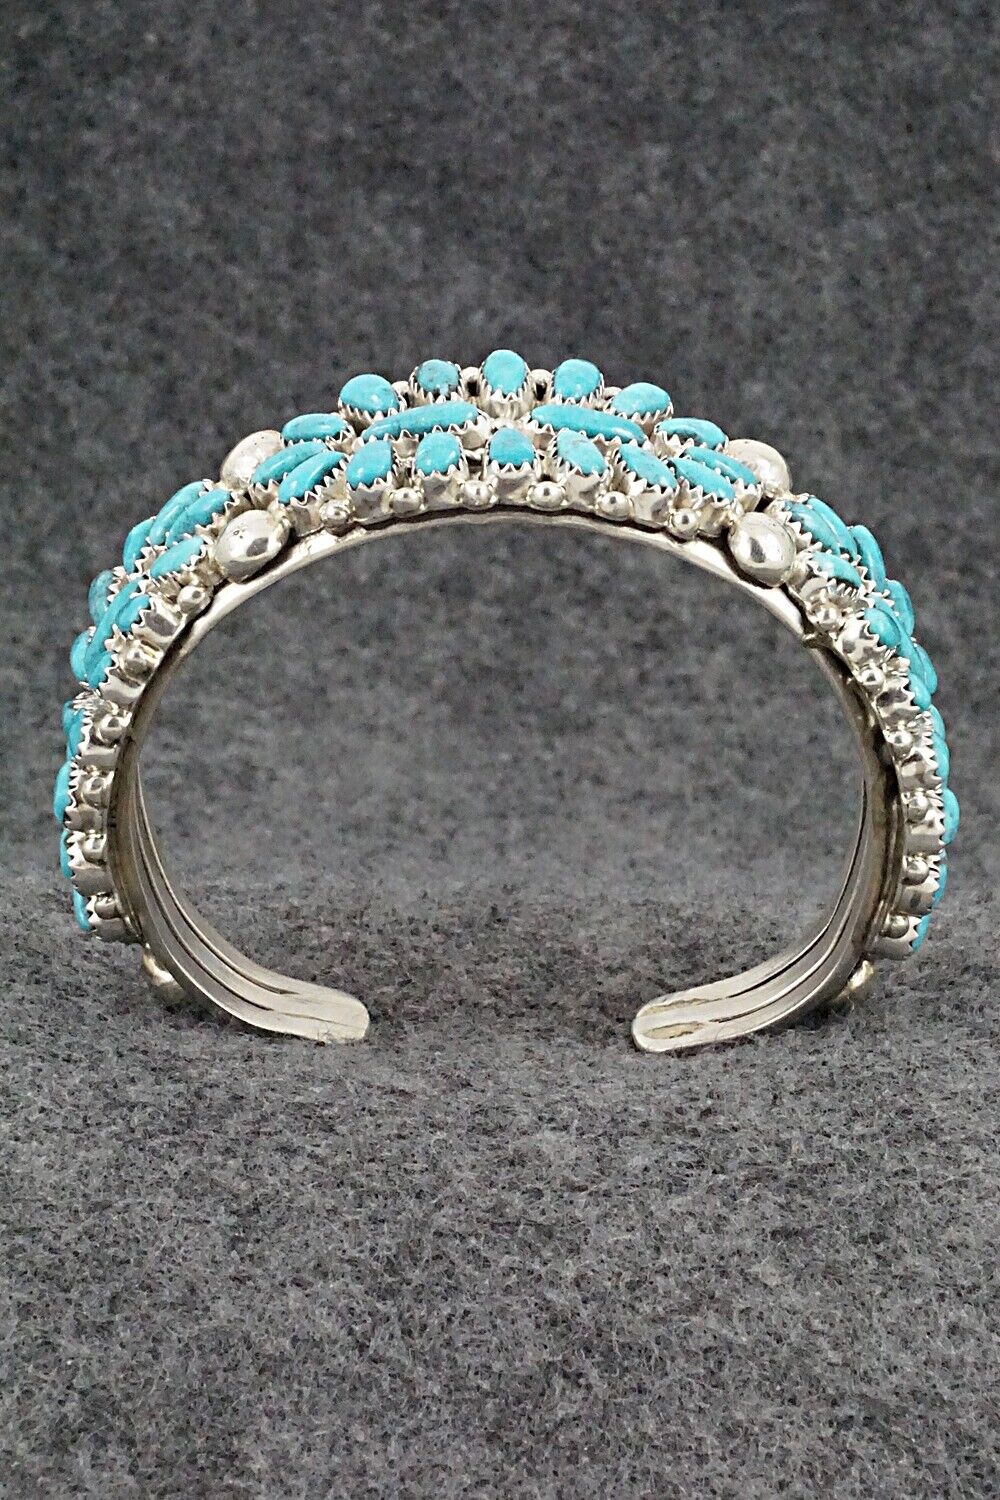 Turquoise & Sterling Silver Bracelet - Jaz Wilson